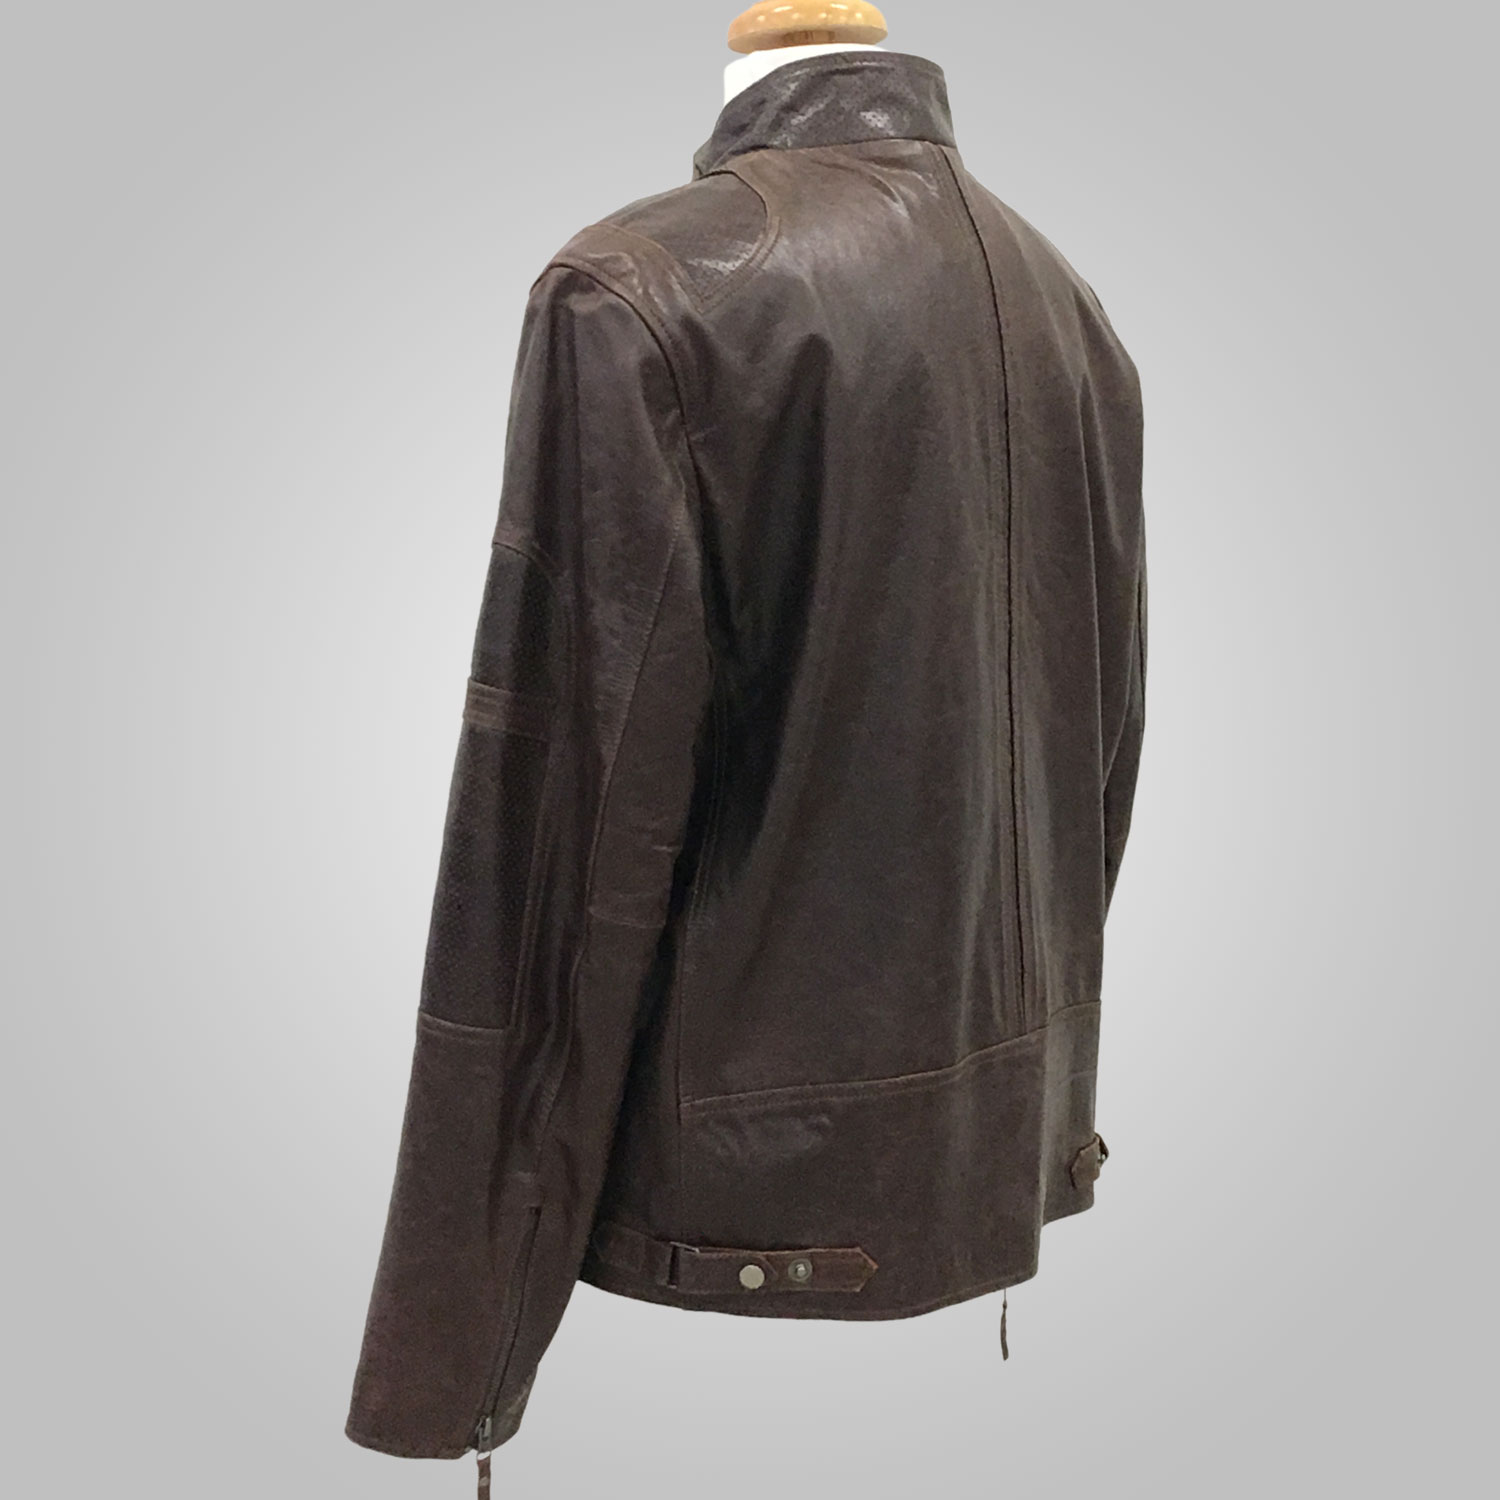 Black Leather Jacket - Black Adam 001 - L'Aurore Leather Jacket